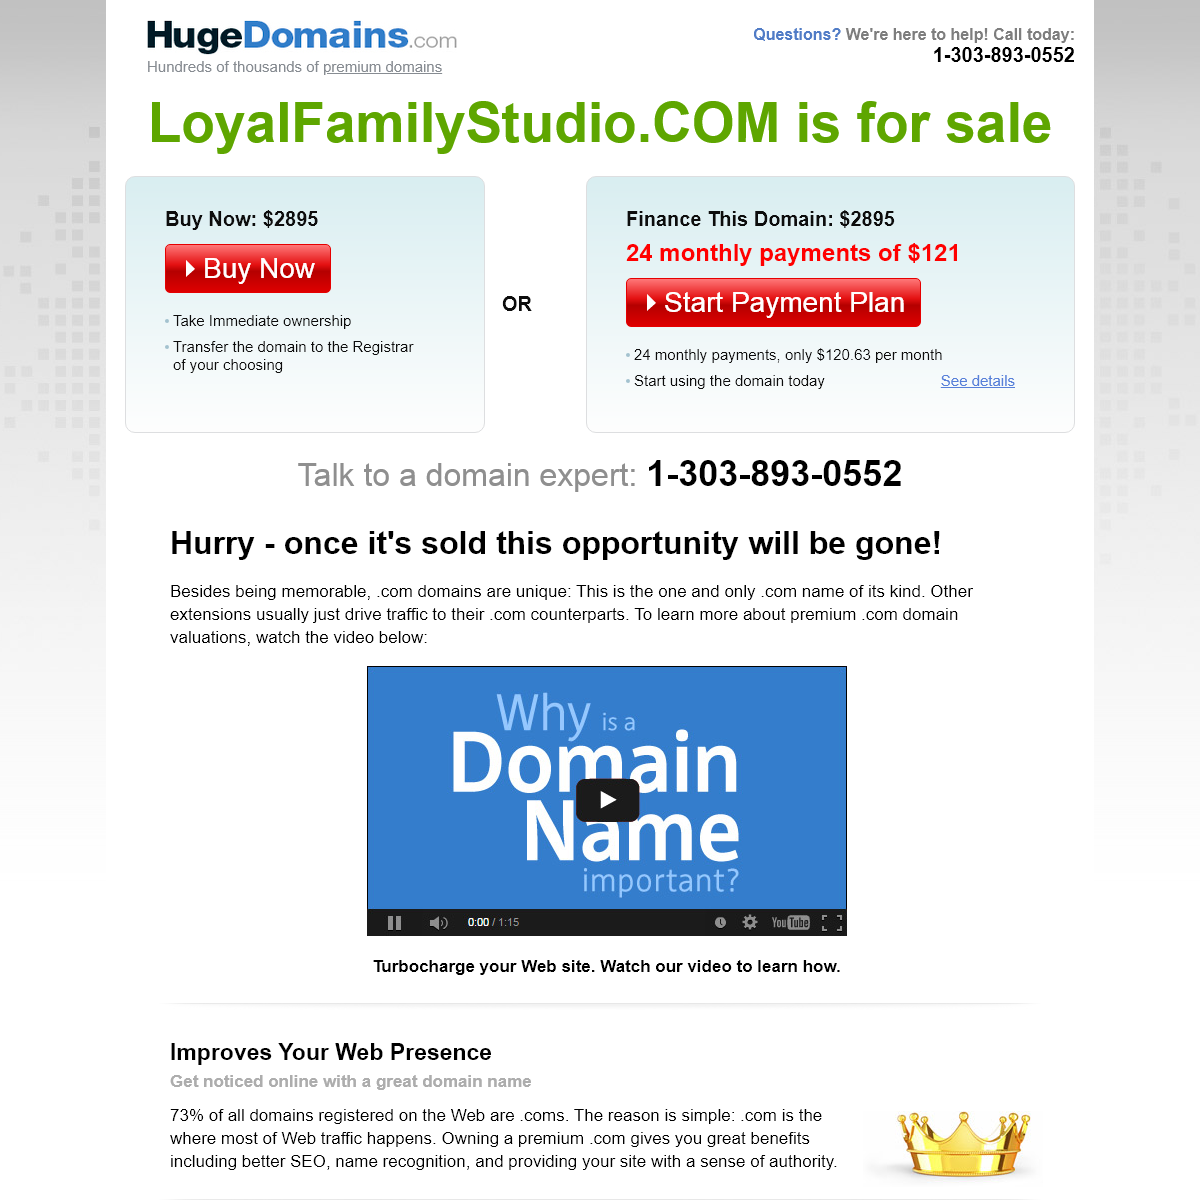 HugeDomains.com - LoyalFamilyStudio.COM is for sale (Loyal Family Studio)